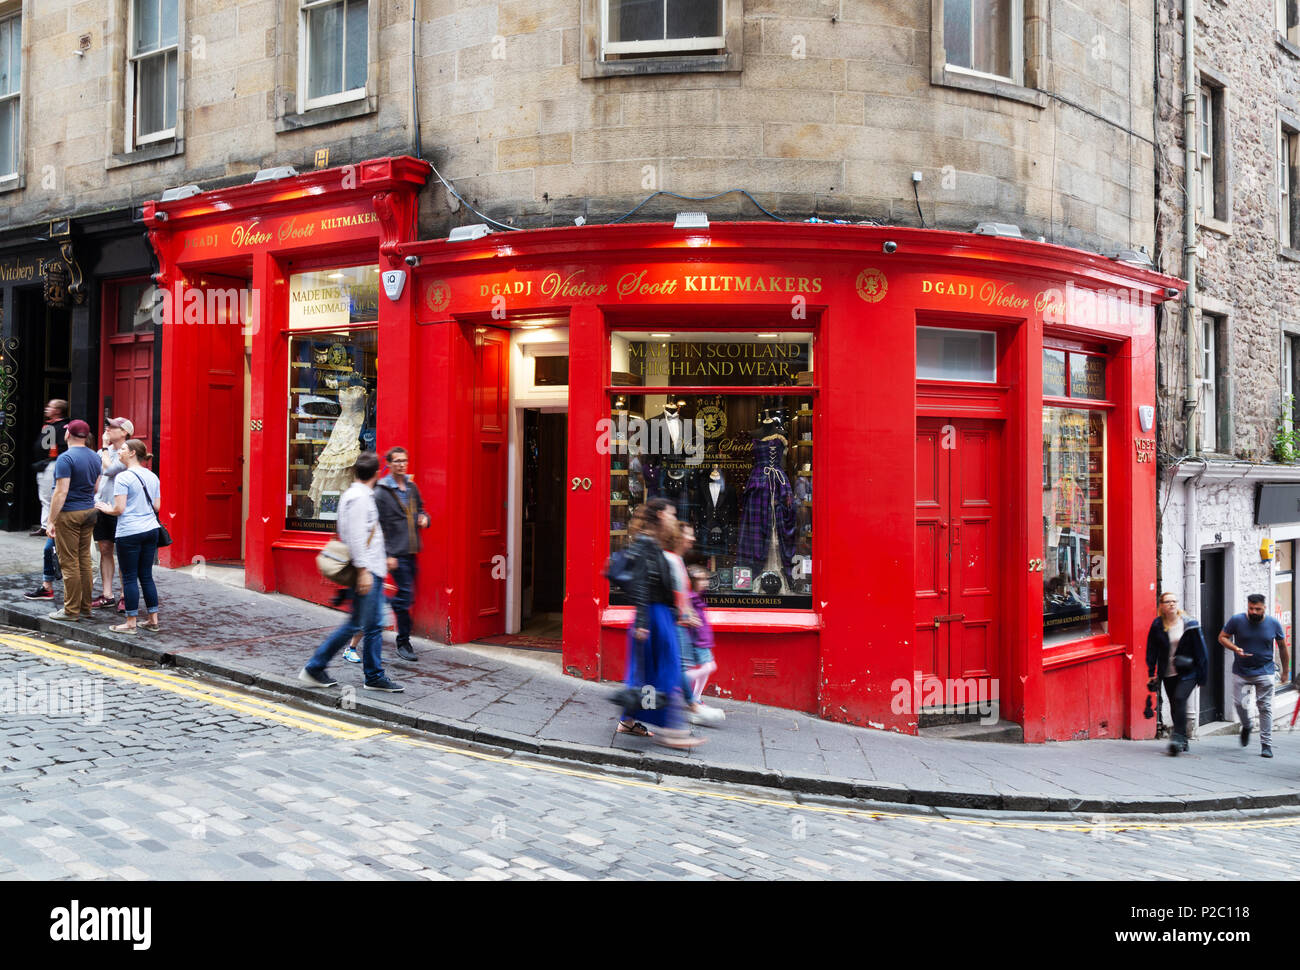 Bunte Victor Scott Kiltmakers shop, West Bogen, Altstadt von Edinburgh, Edinburgh Schottland Großbritannien Stockfoto